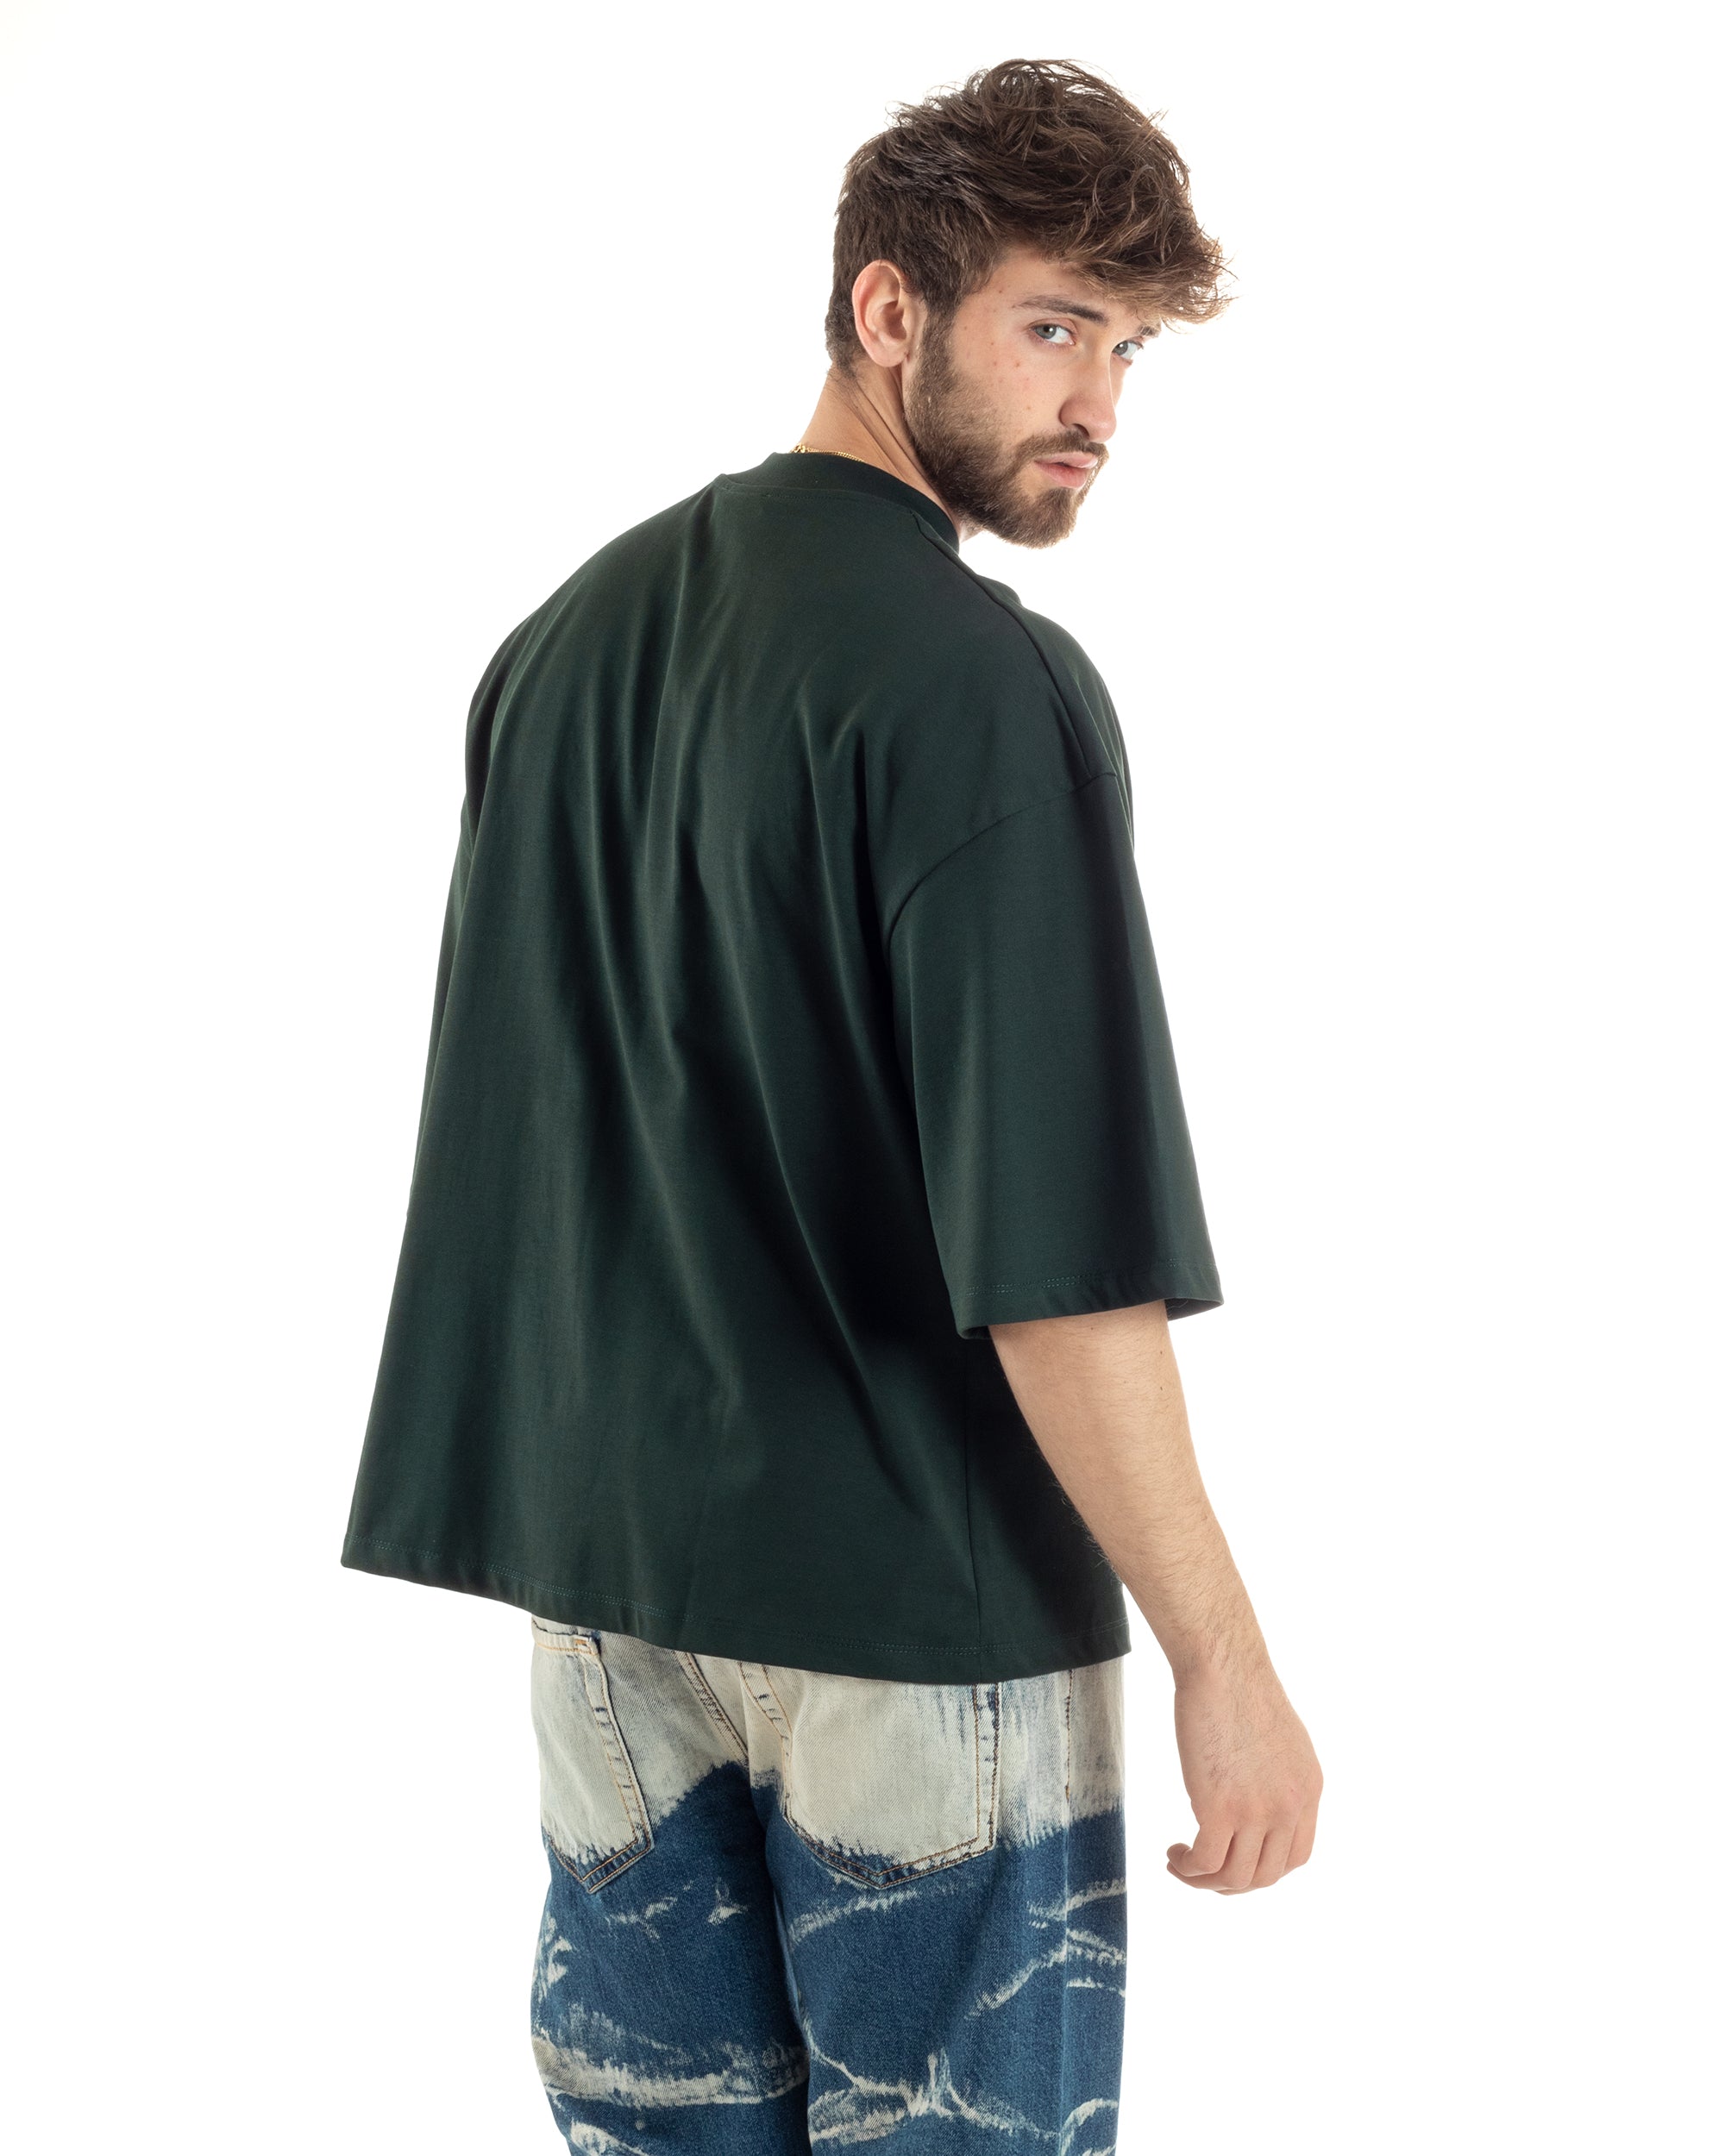 T-shirt Uomo Girocollo Boxy Fit Oversize Cotone Spalla Scesa Gola Alta Casual Basic Verde GIOSAL-TS3026A